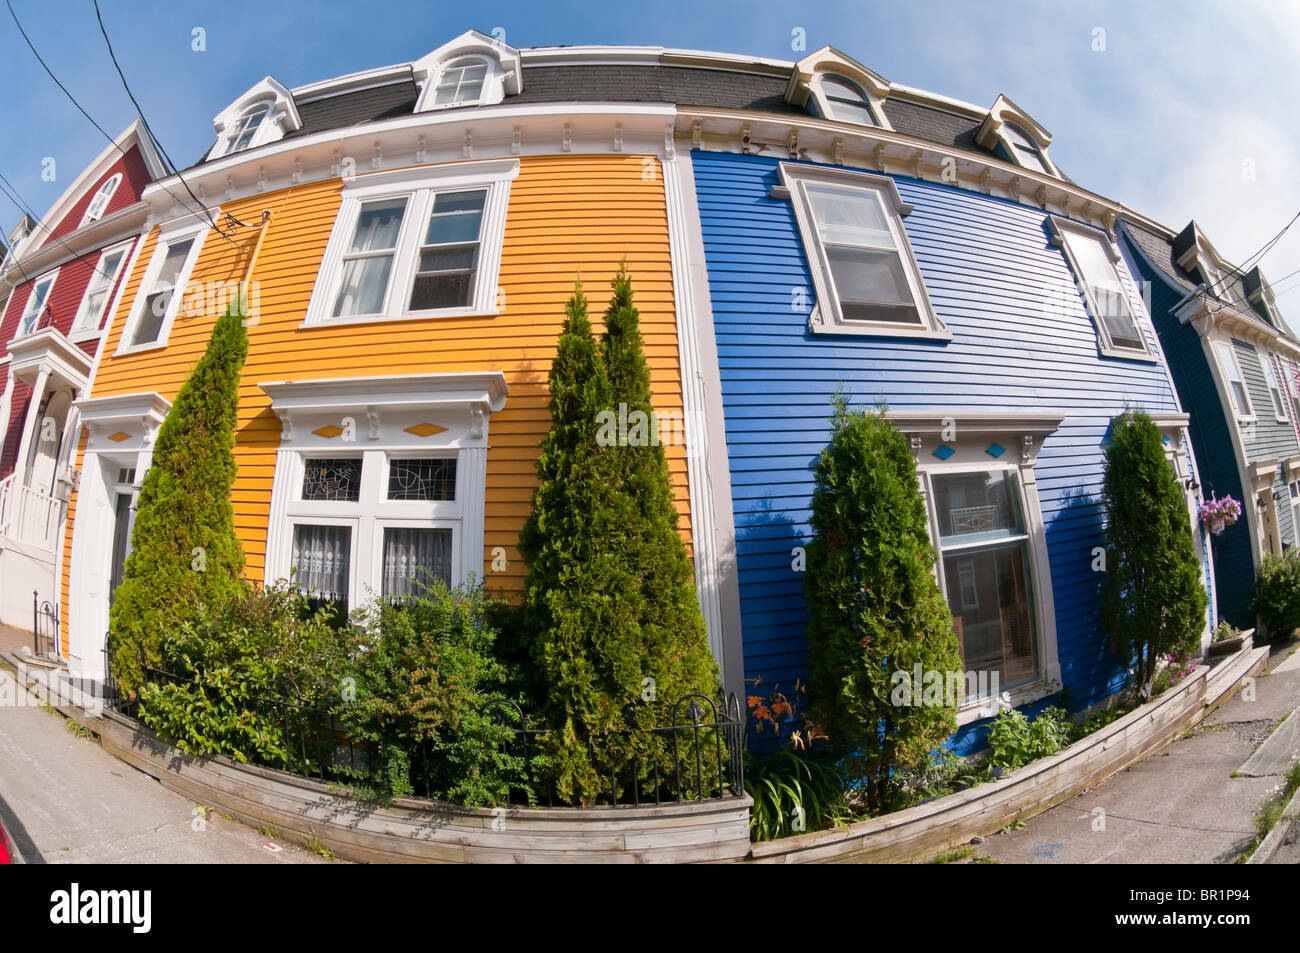 Fish-eye image of colorful jelly bean row houses, Gower Street, St. John's, Newfoundland, Canada Stock Photo